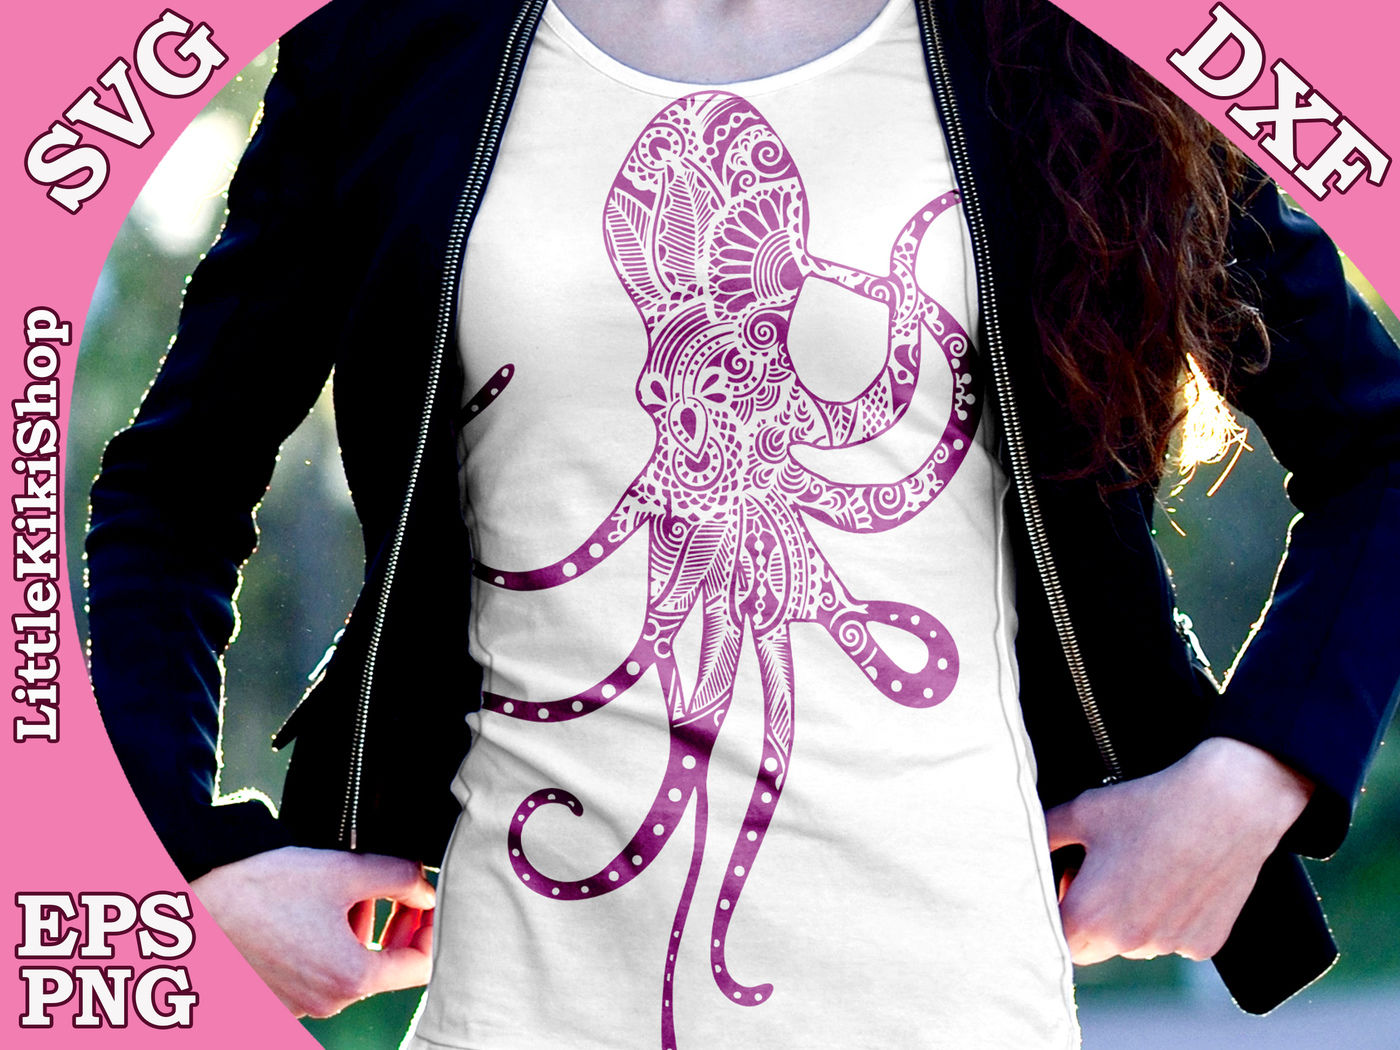 Sea Ocean Octopus clipart Octopus SVG Digital laser cut files for Cricut Silhouette. Octopus mandala SVG Intricate Zentangle Animal